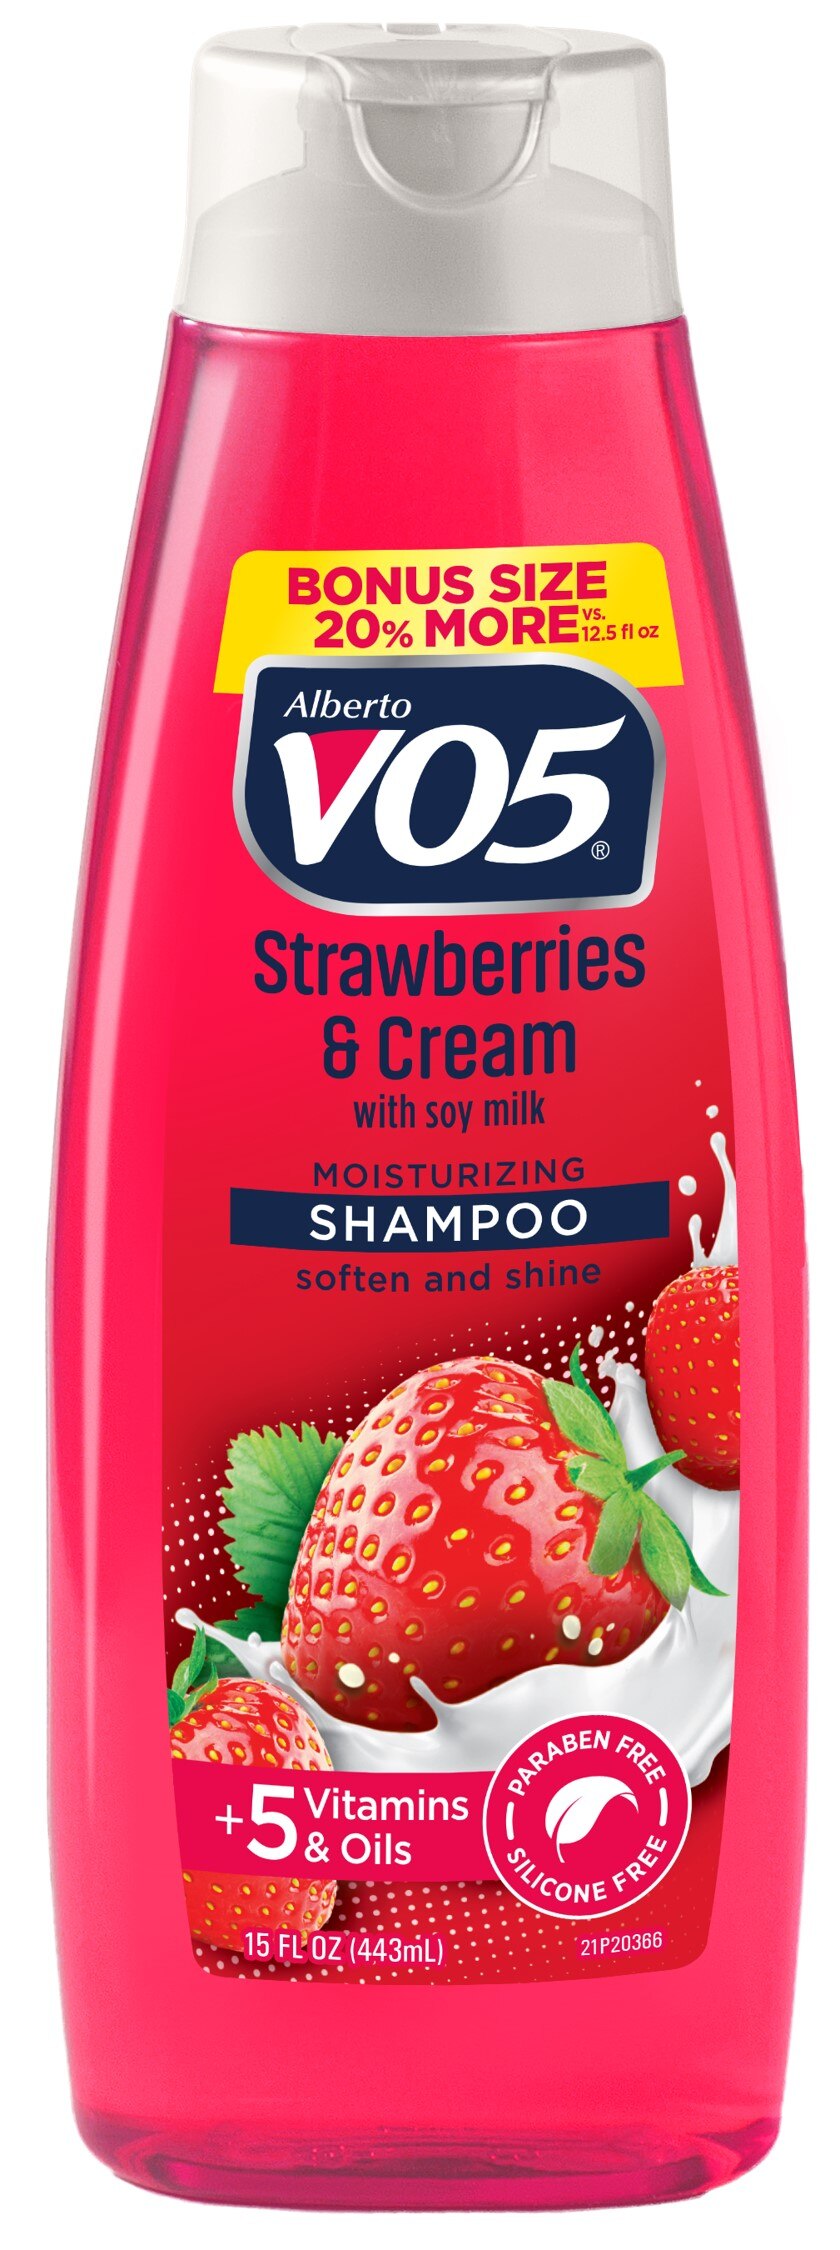 VO5 Shampoo